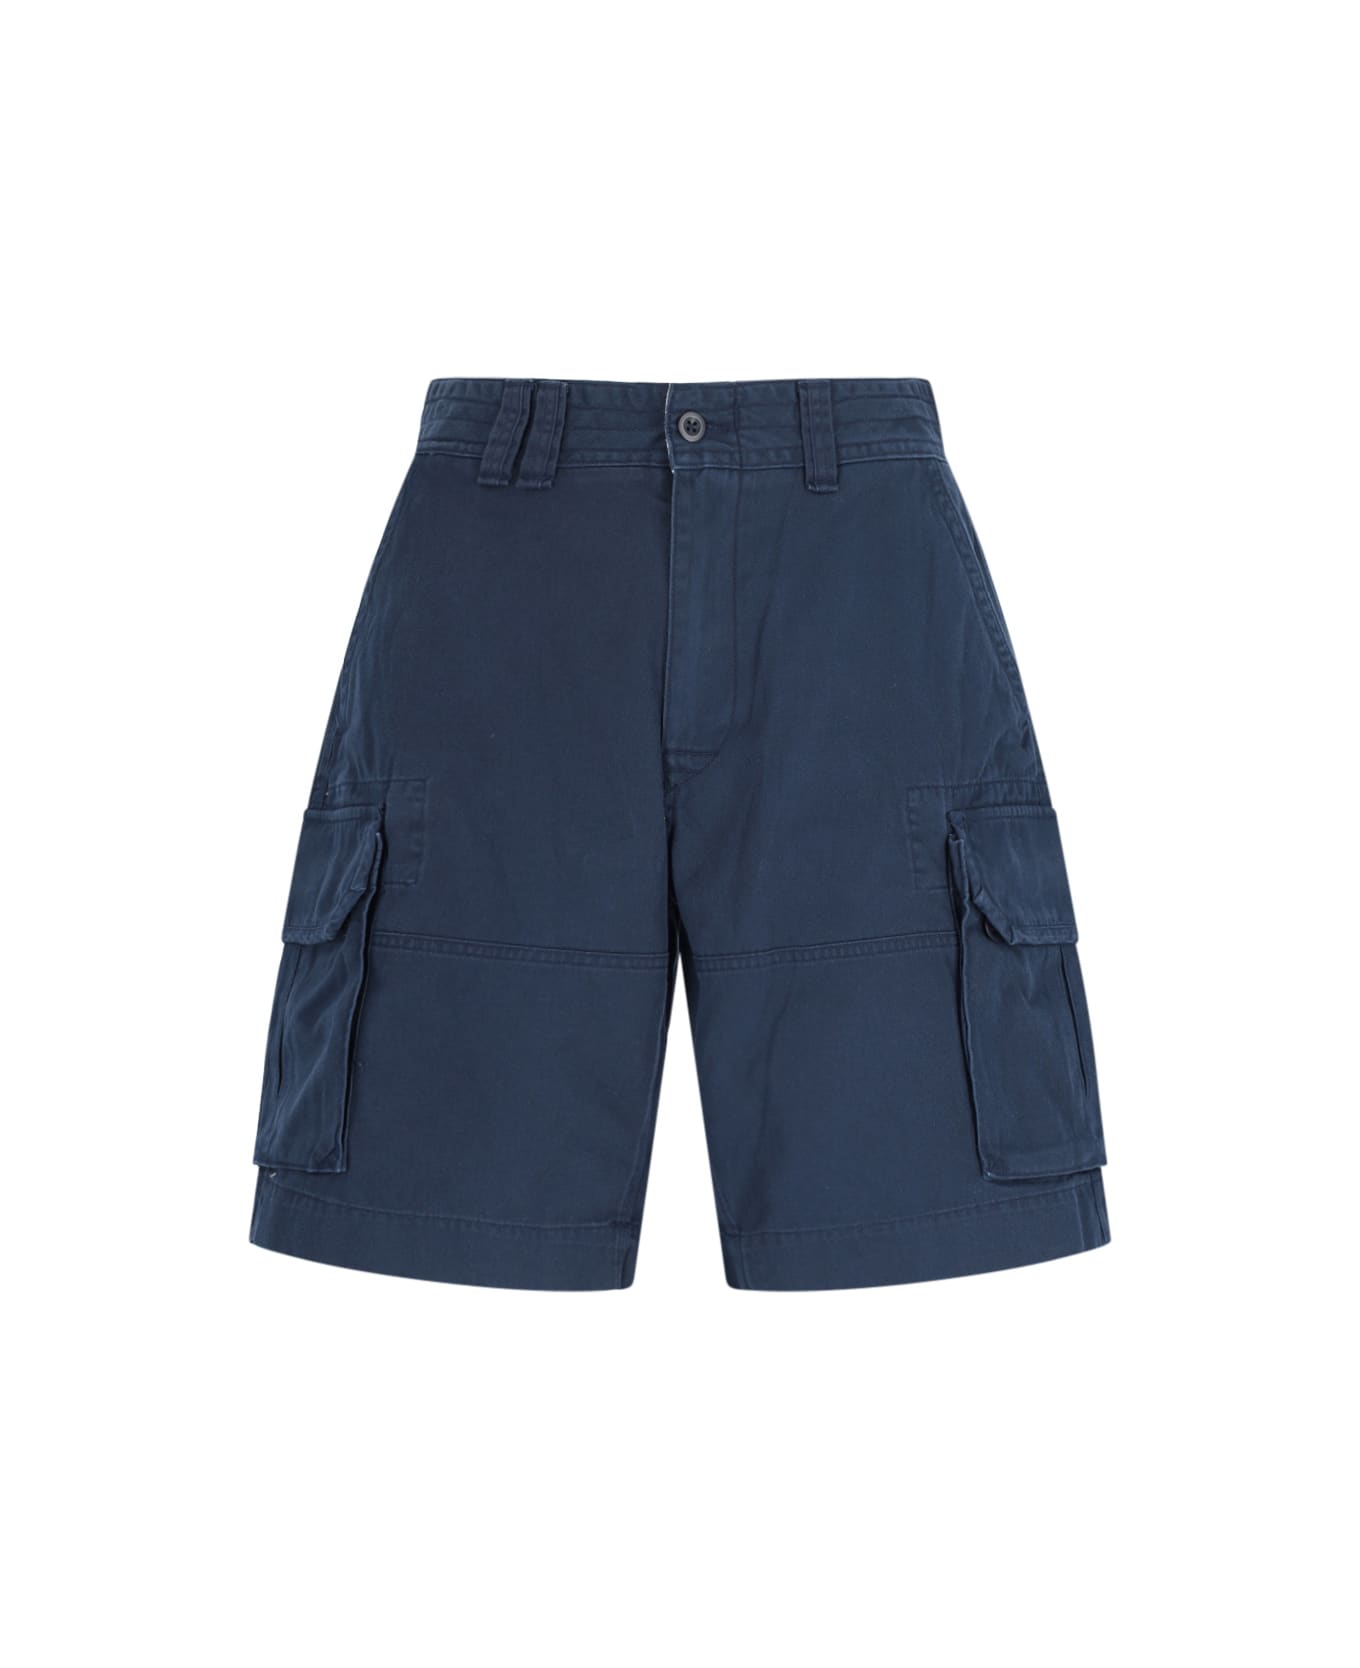 Polo Ralph Lauren Cargo Shorts - Navy Blue ボトムス